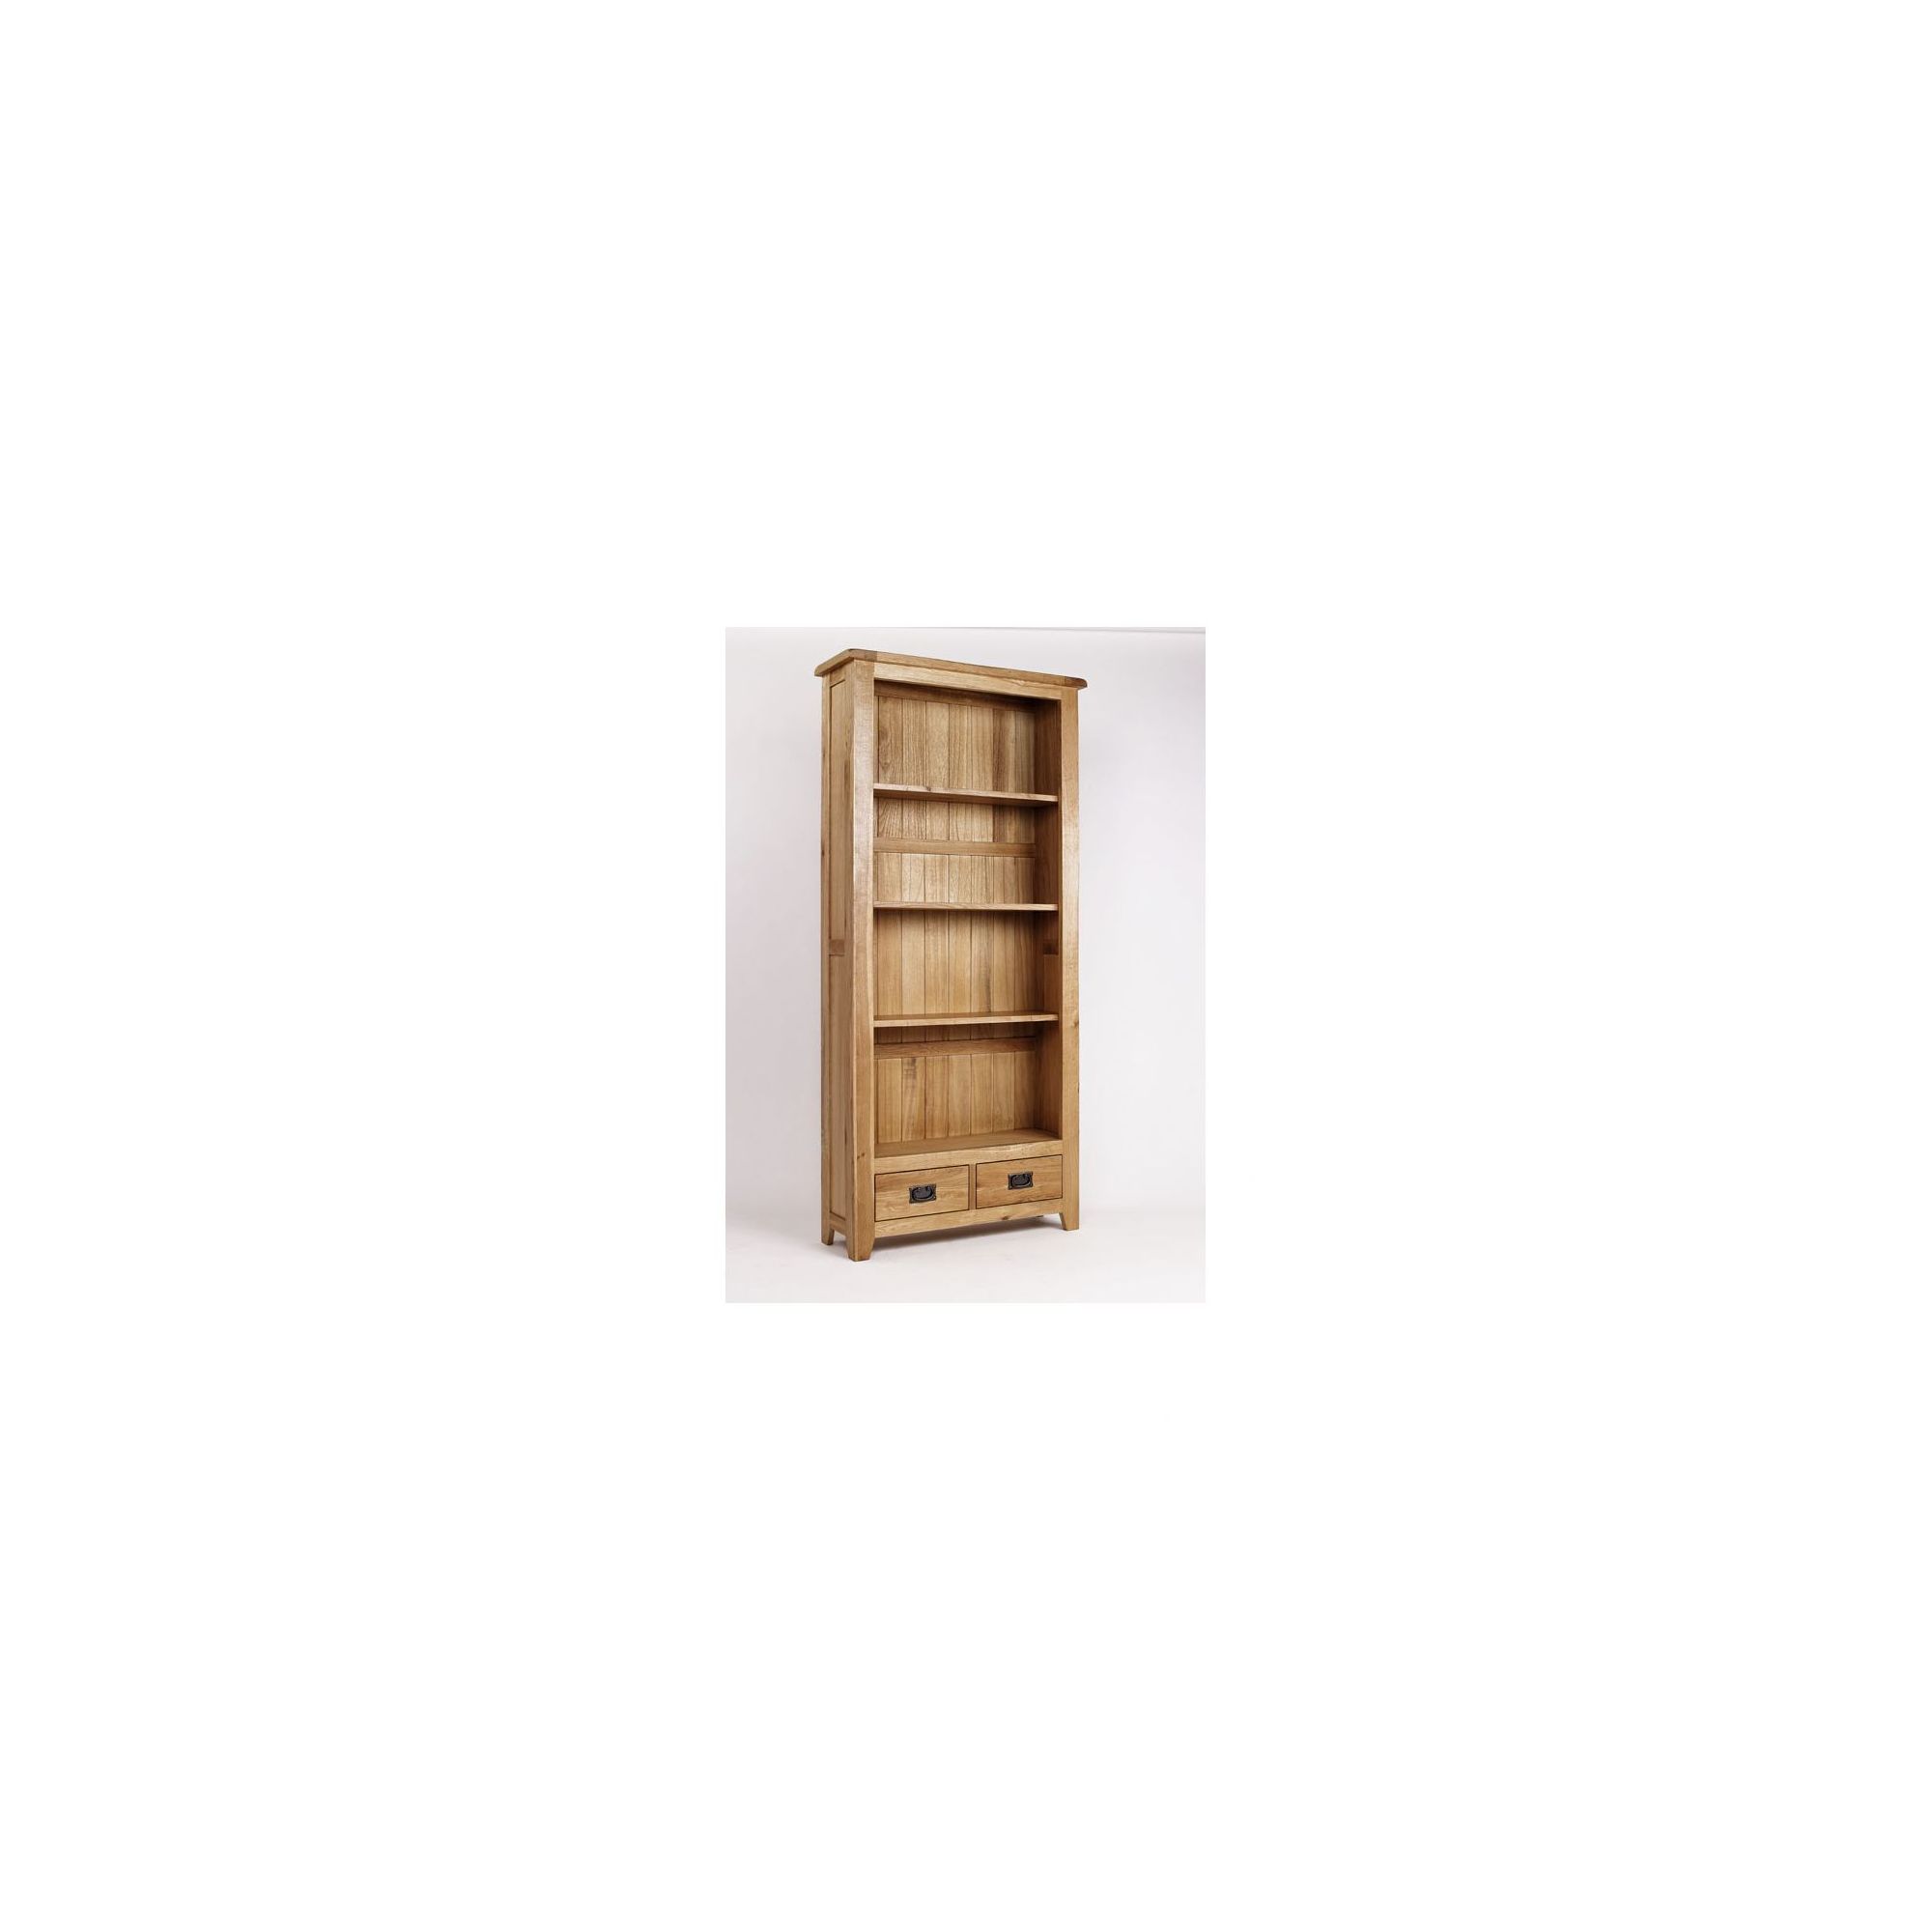 Ametis Westbury Reclaimed Oak Tall Bookcase at Tesco Direct